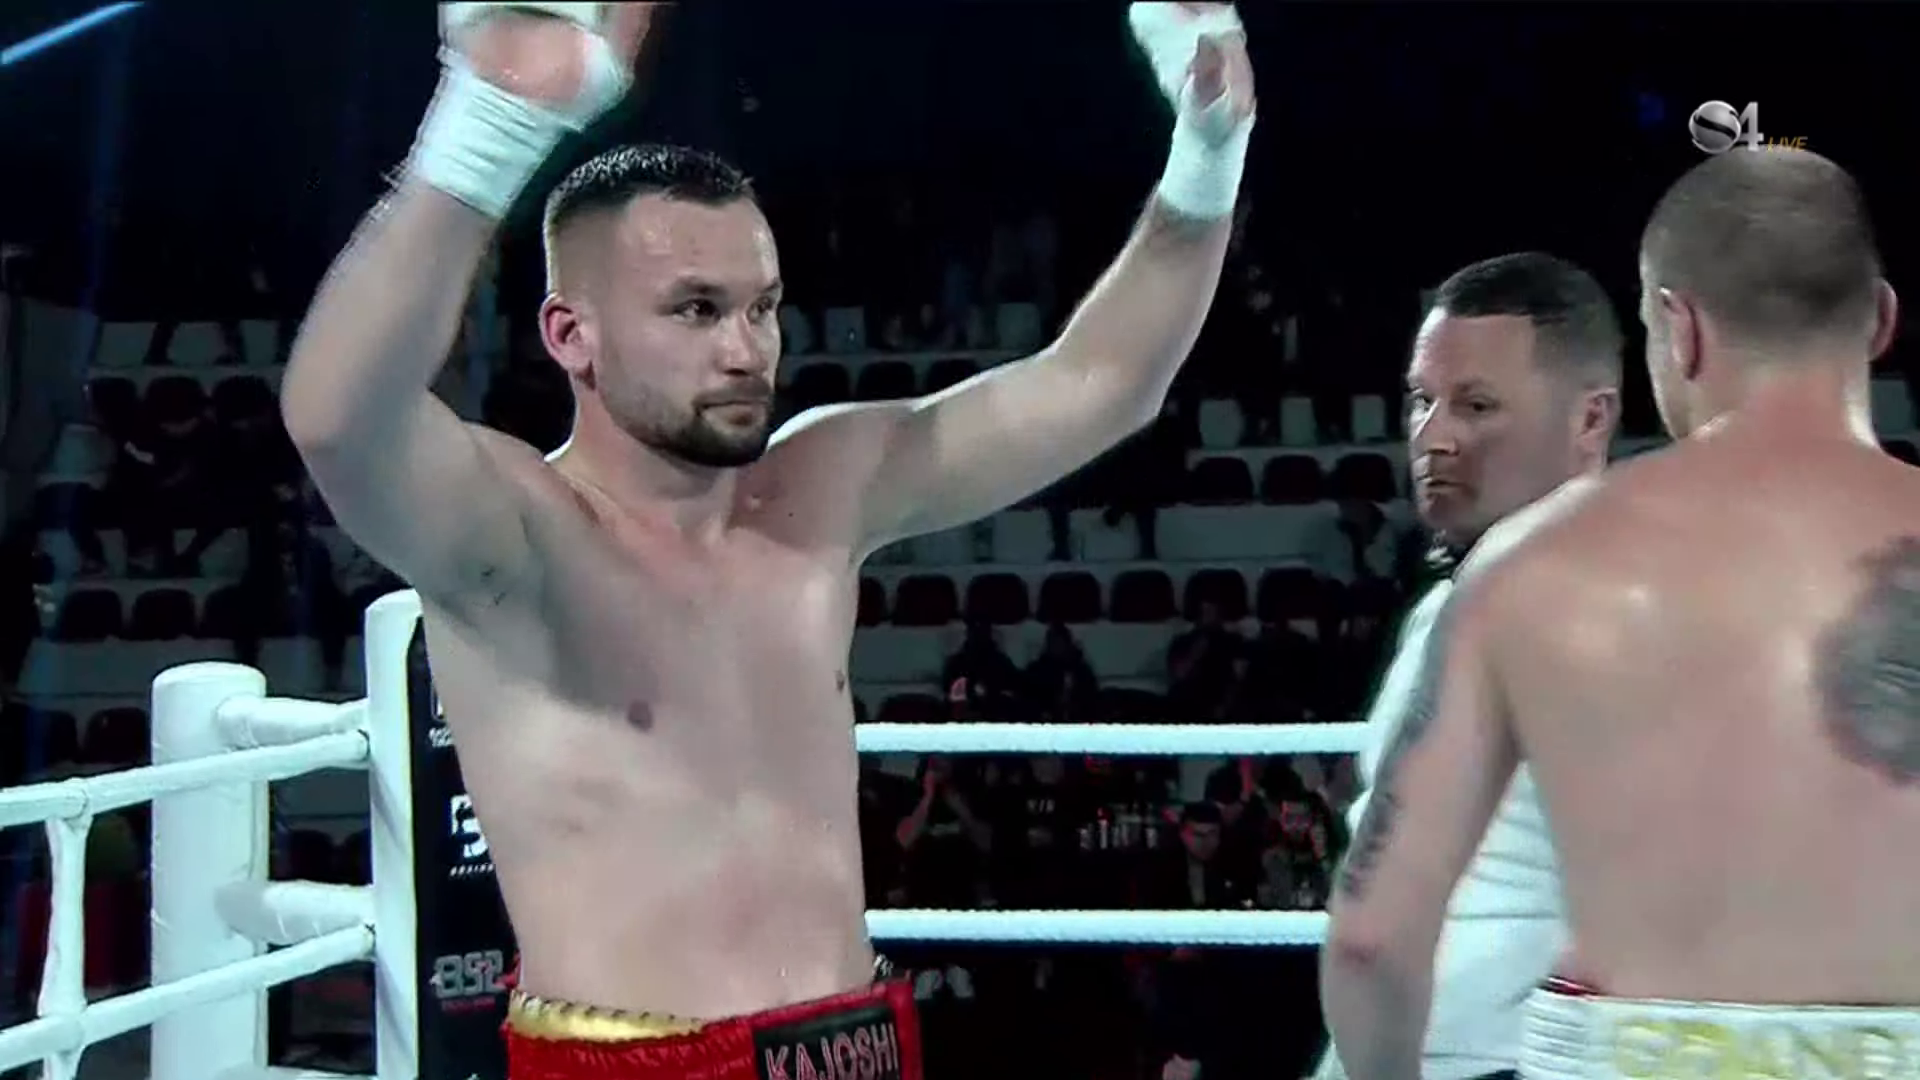 ‘Grushti i Hekurt’, boksieri shqiptar mposht kundërshtarin nga Nikaragua